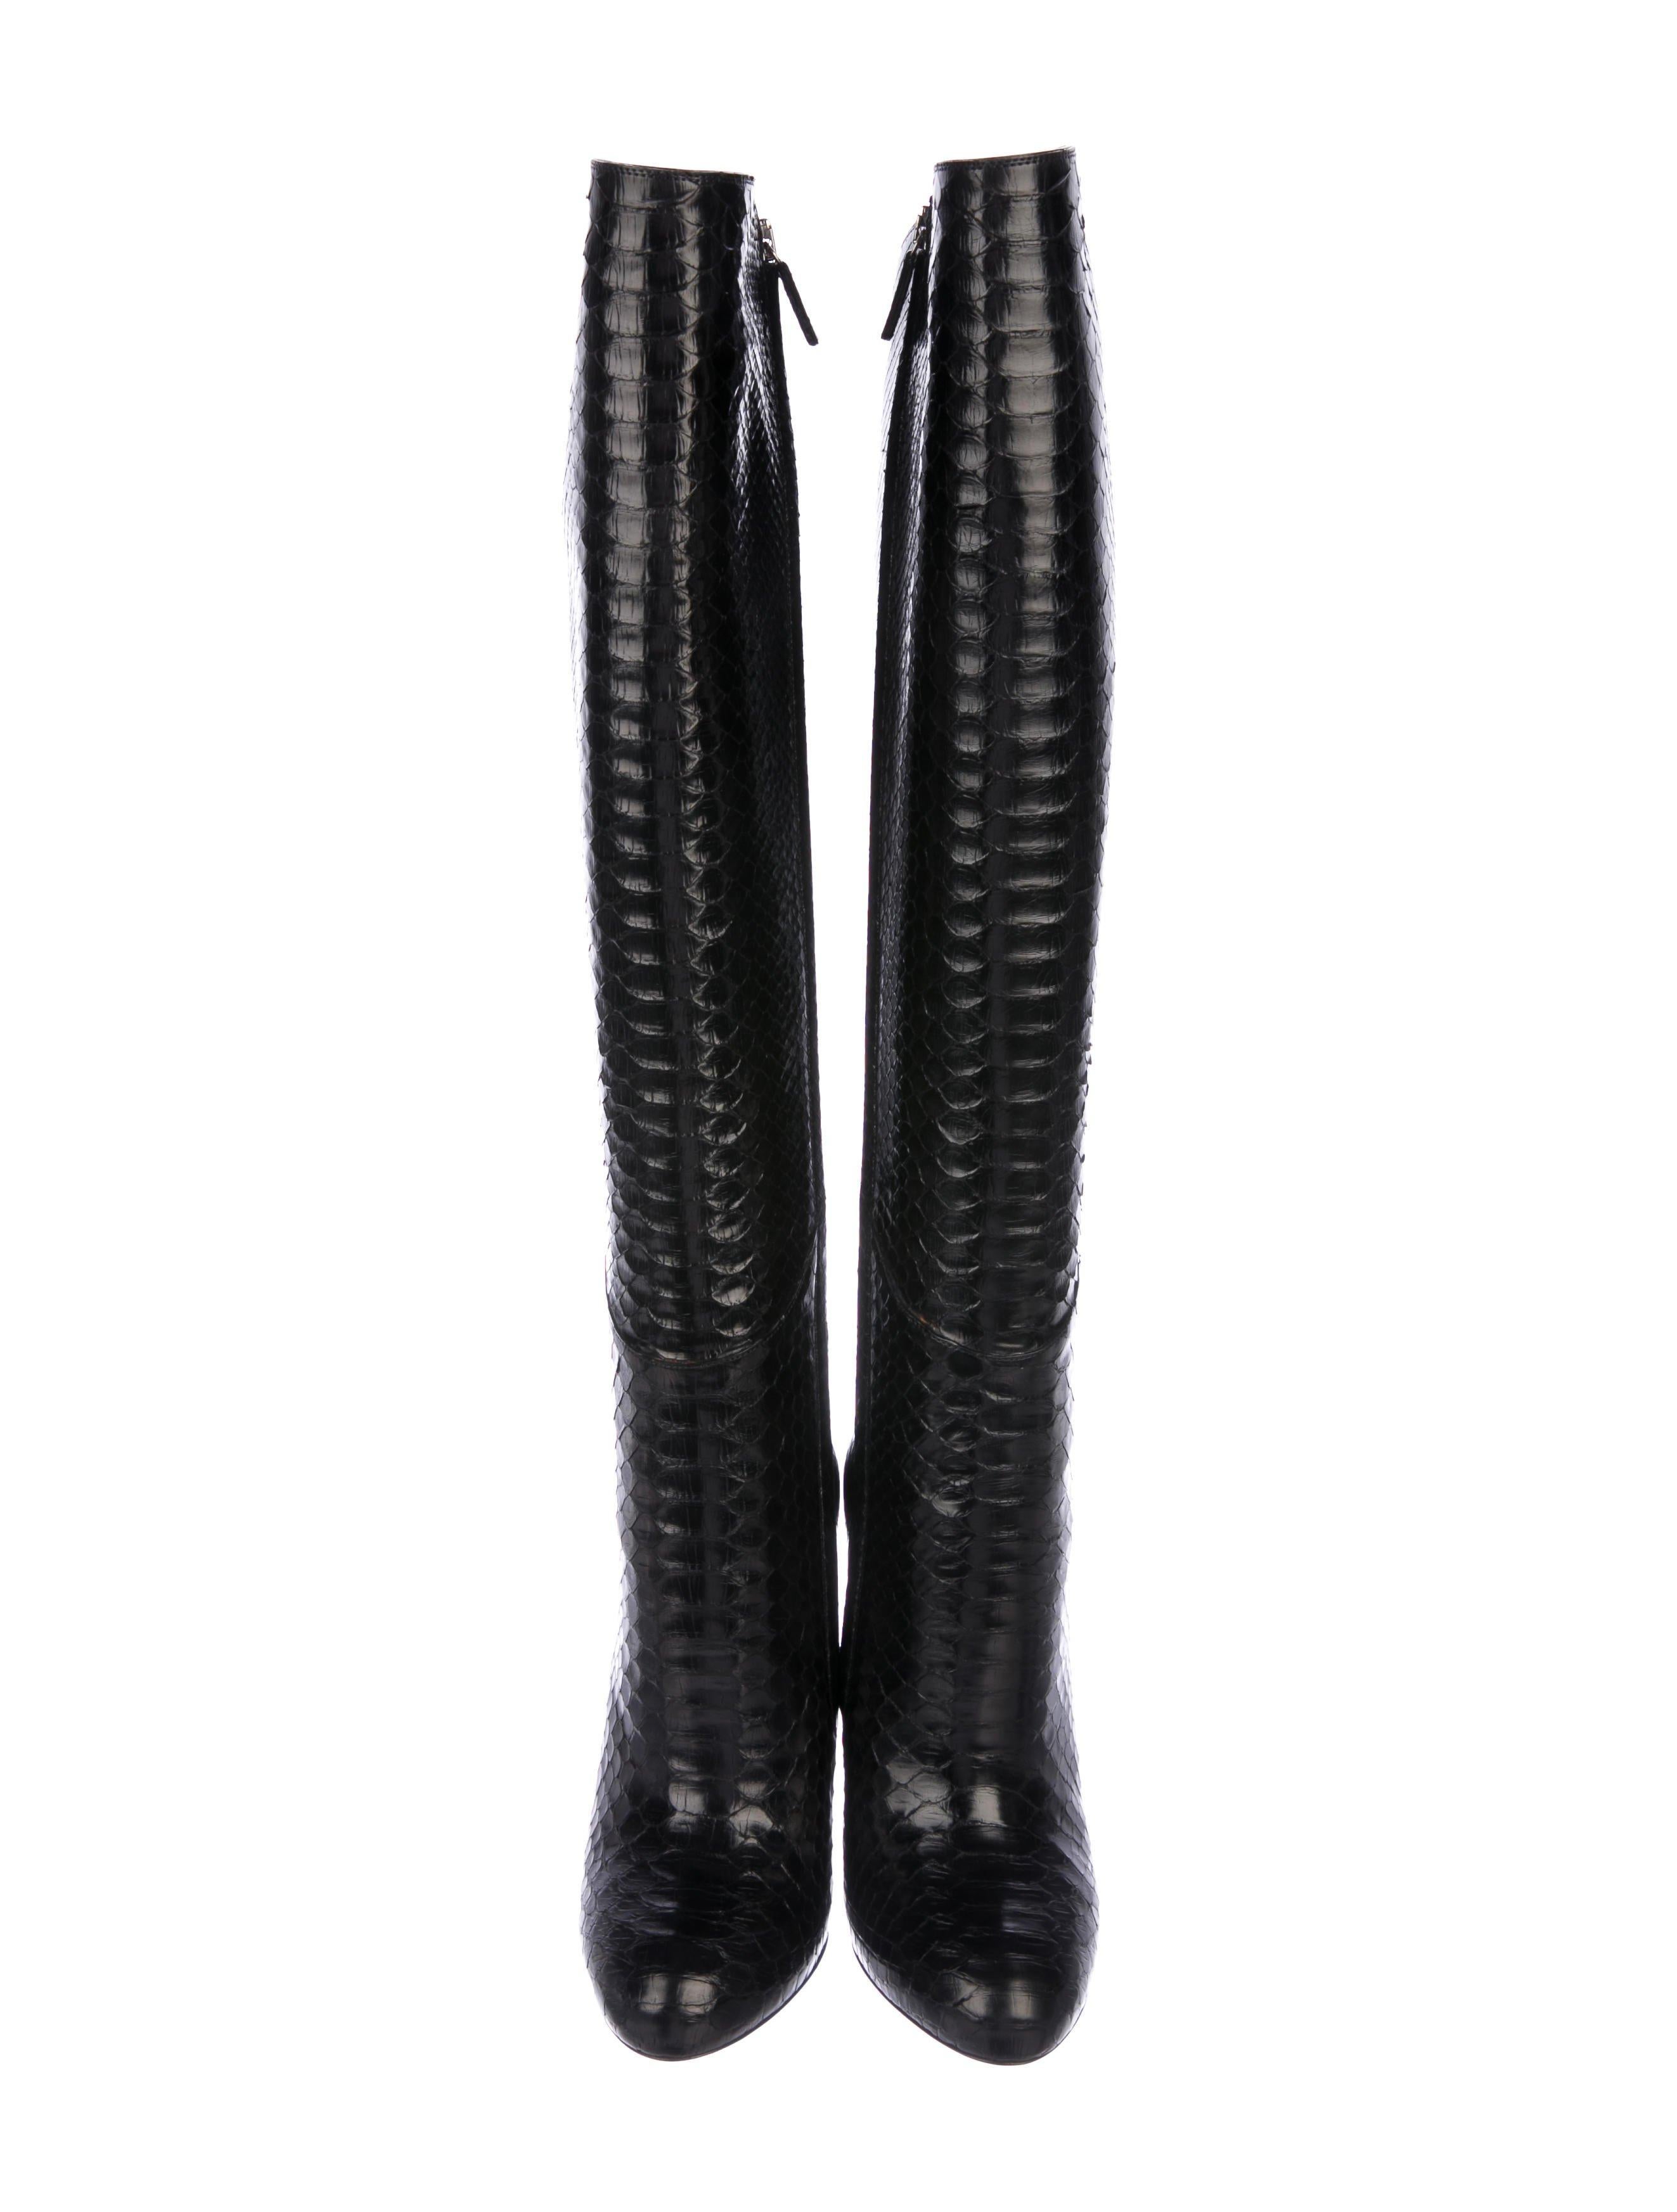 Gucci NEW Black Snakeskin Evening Knee Riding High Heels Boots

Size IT 36
Snakeskin (Python)
Zipper closure
Calf circumference 13